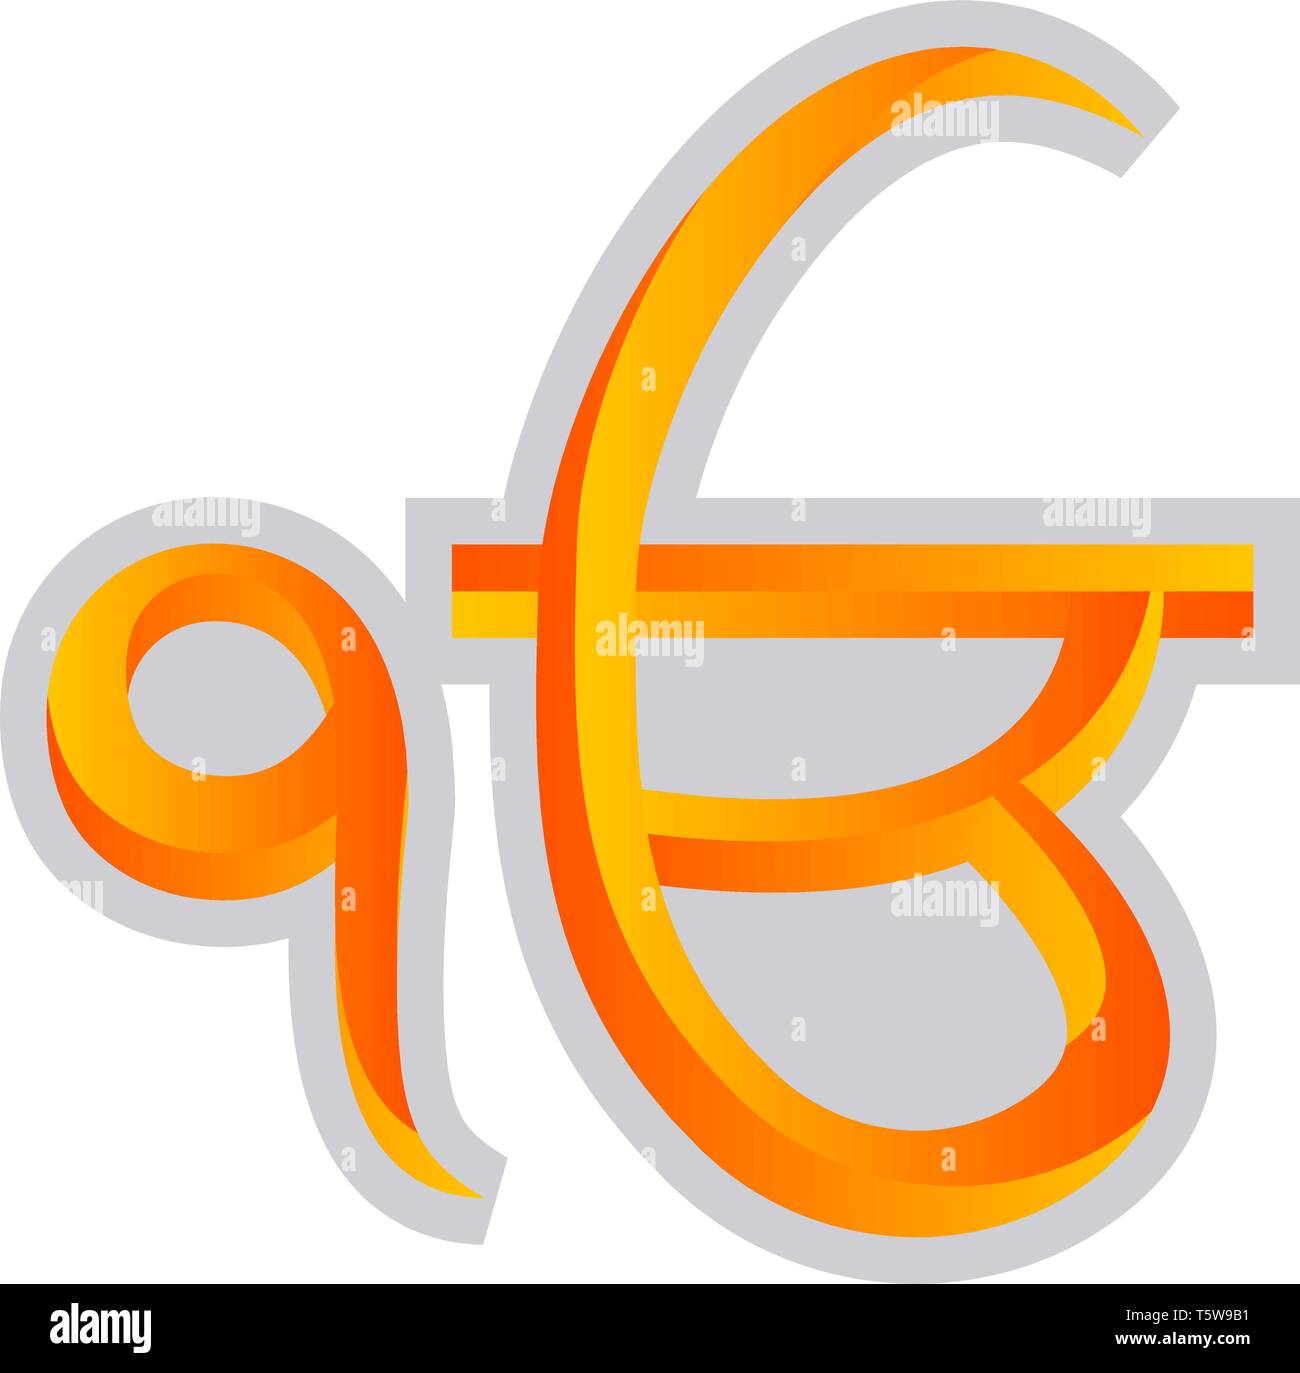 sikh religious symbols